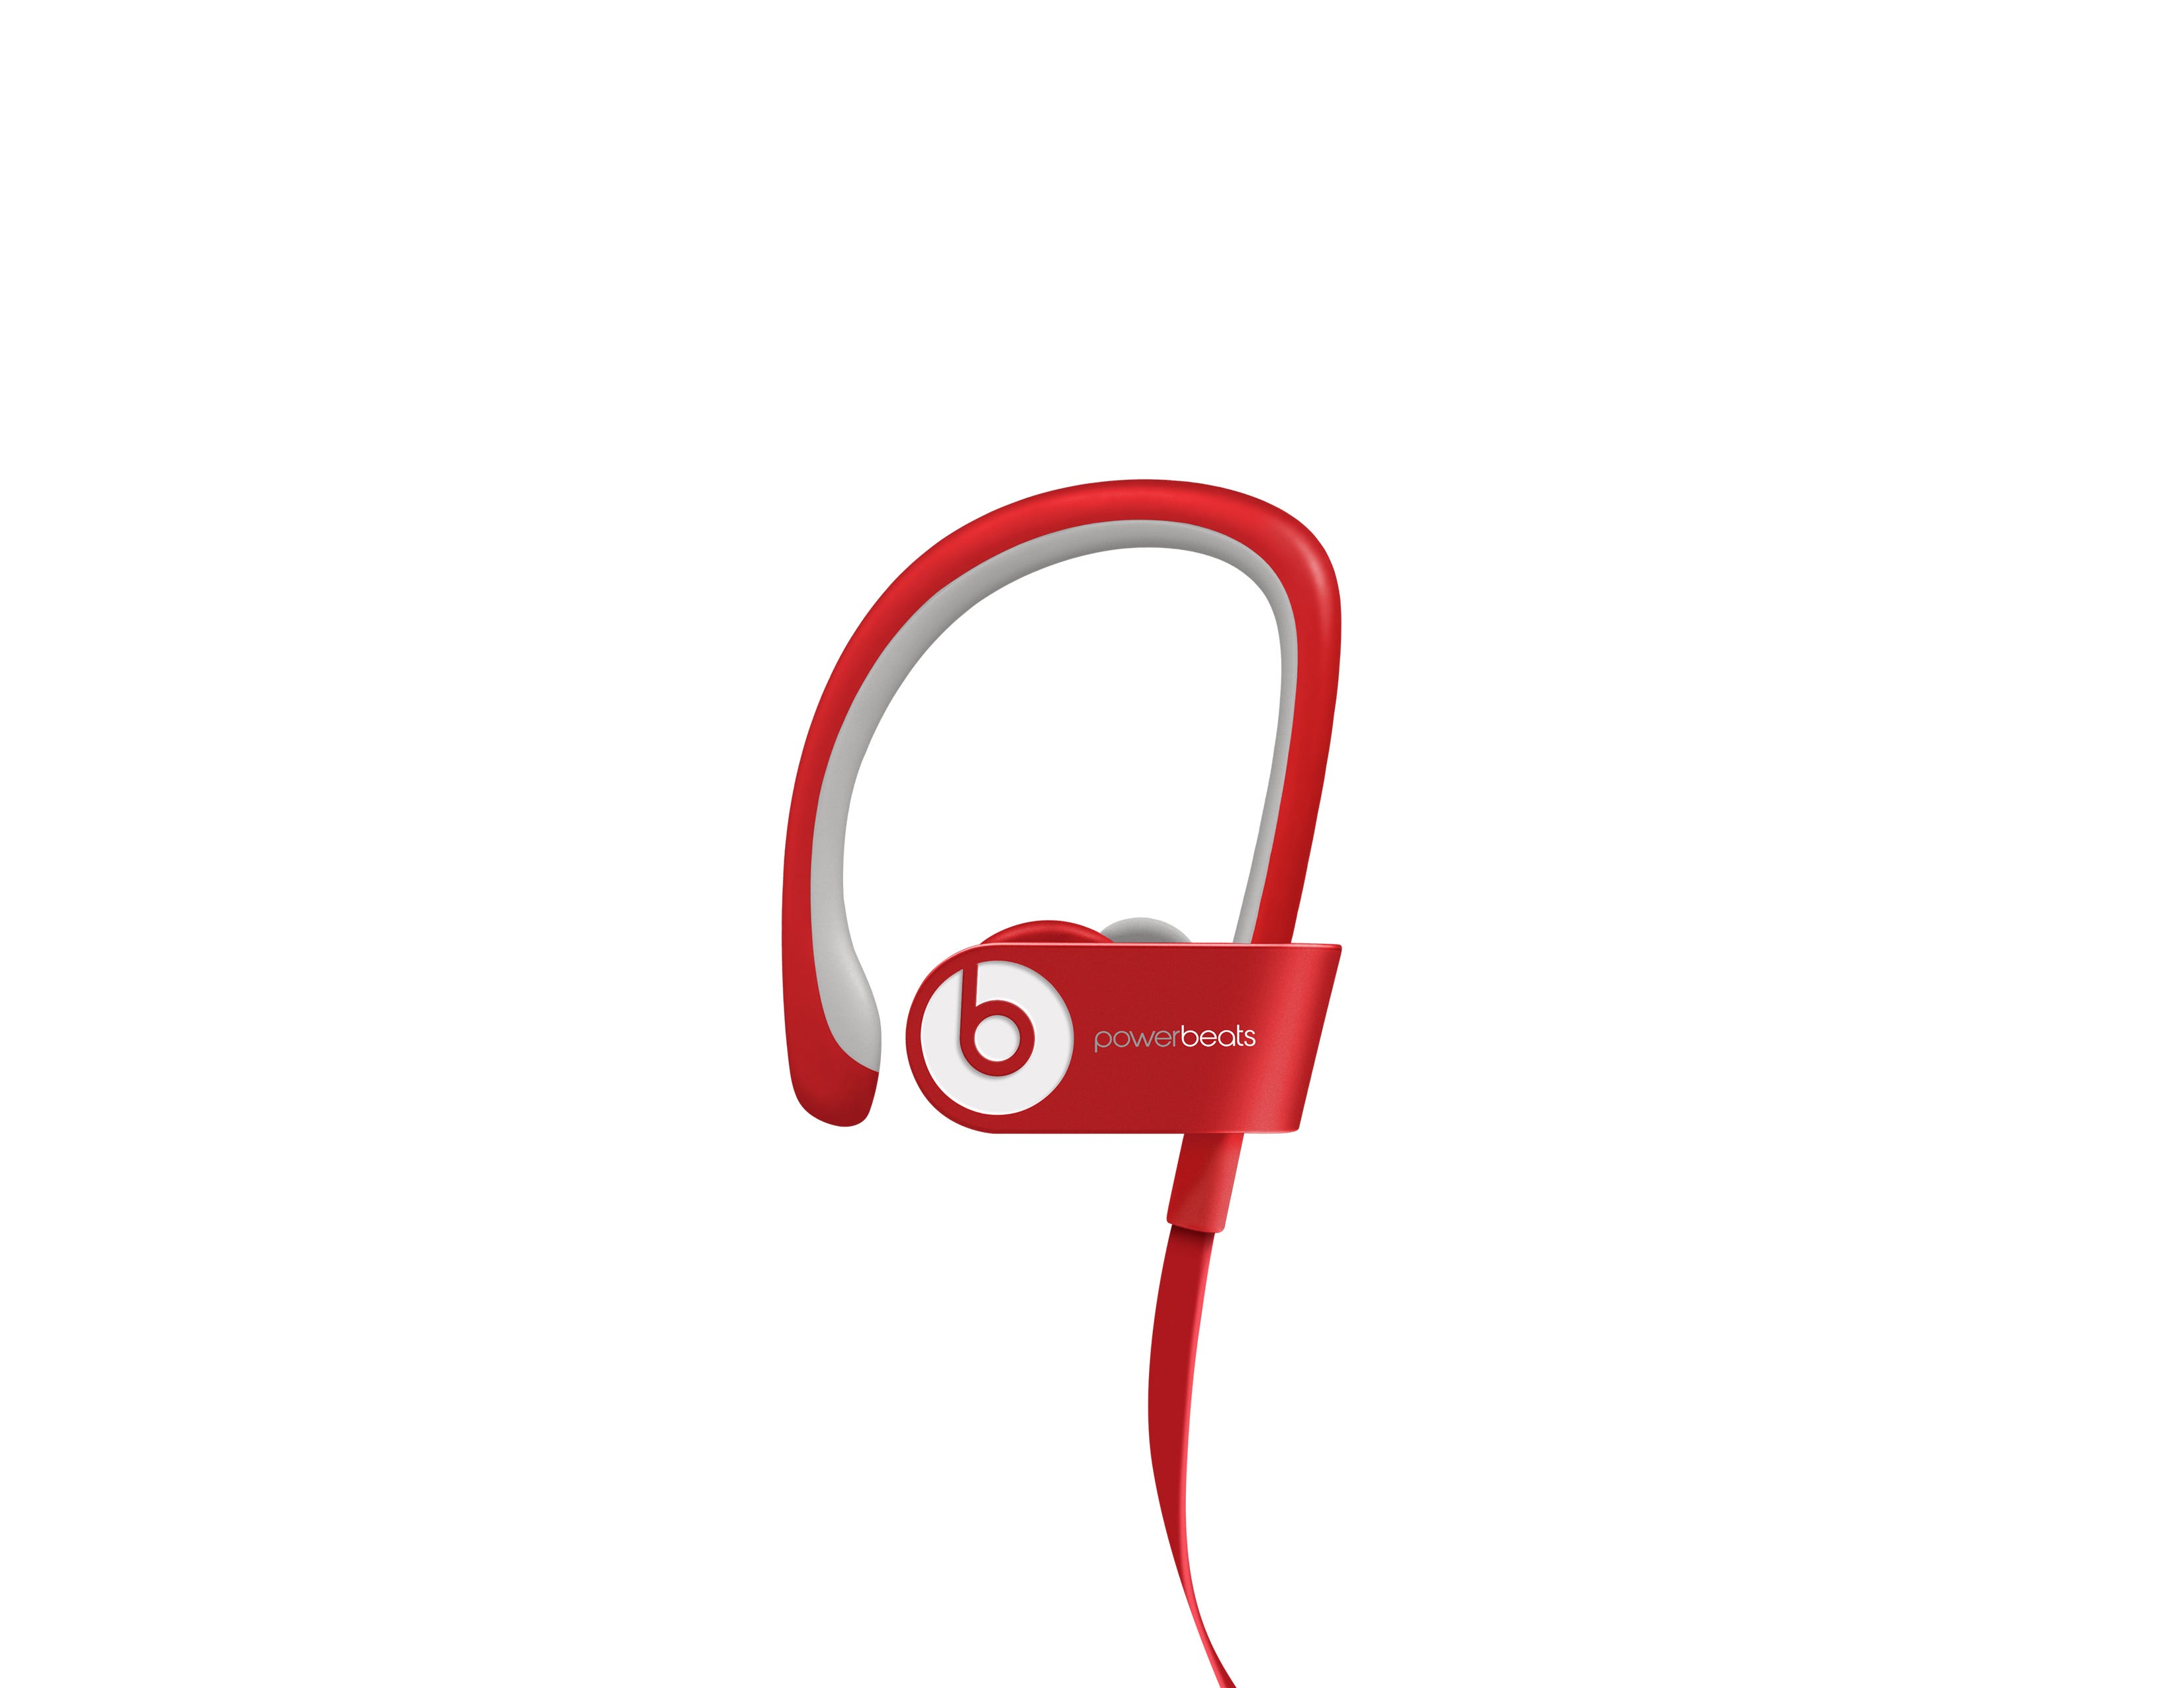 beats wireless headphones white and red